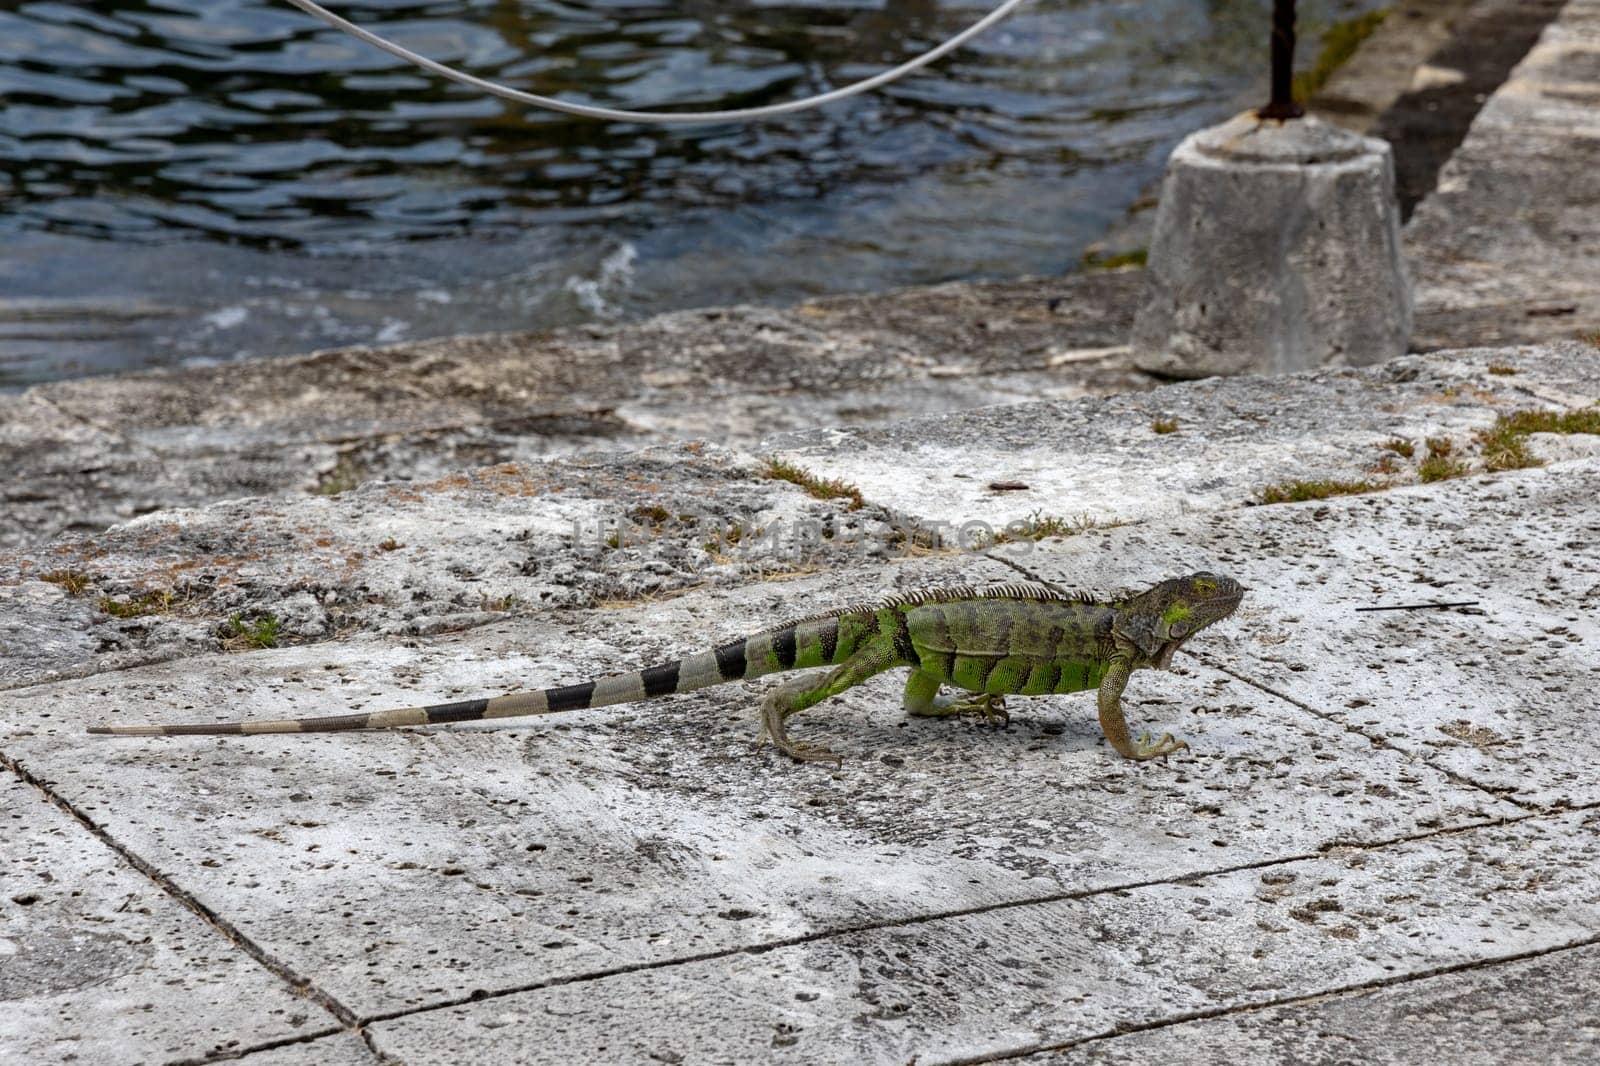 Green exotic iguana on asphalt road, wild reptilian, tropical animal, copy space.